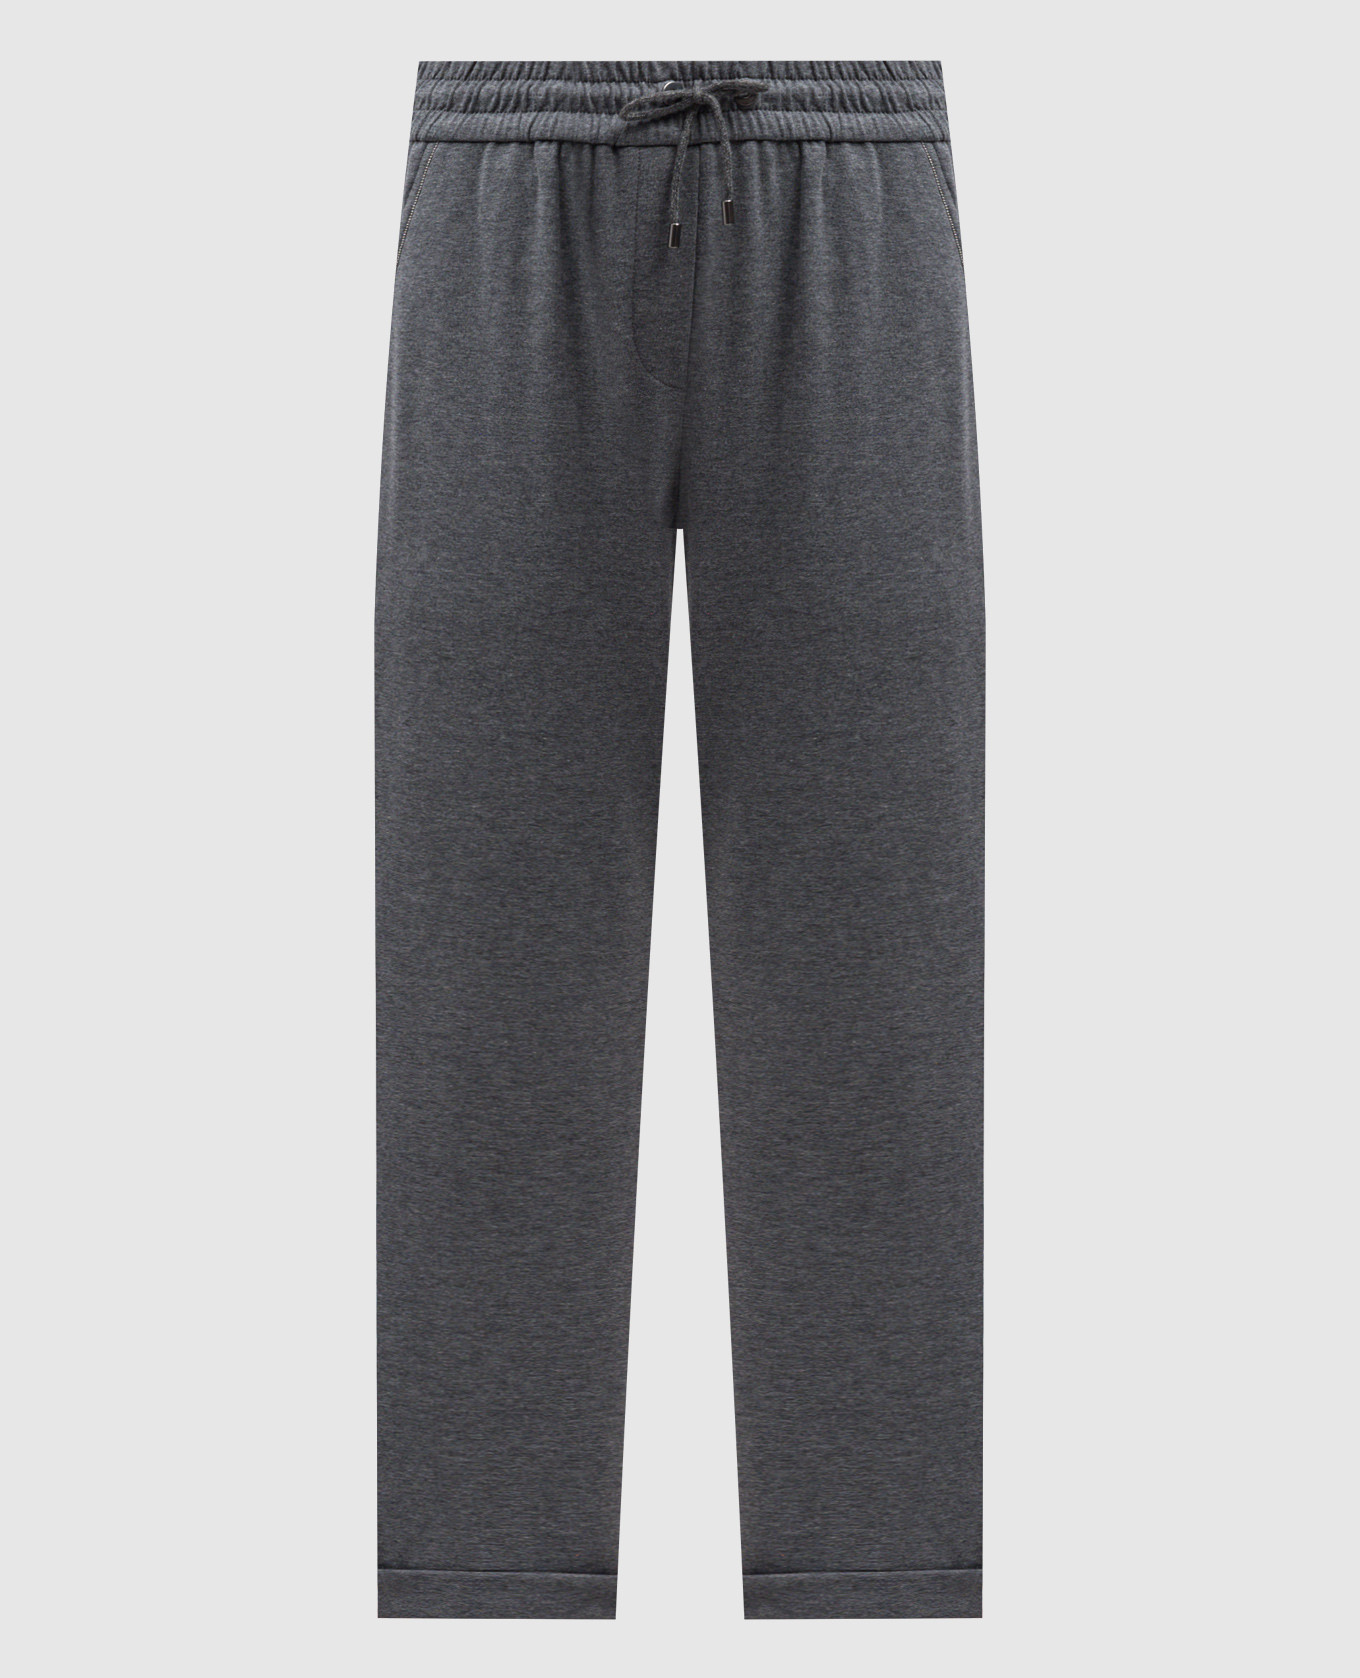 Gray sweatpants with lapels